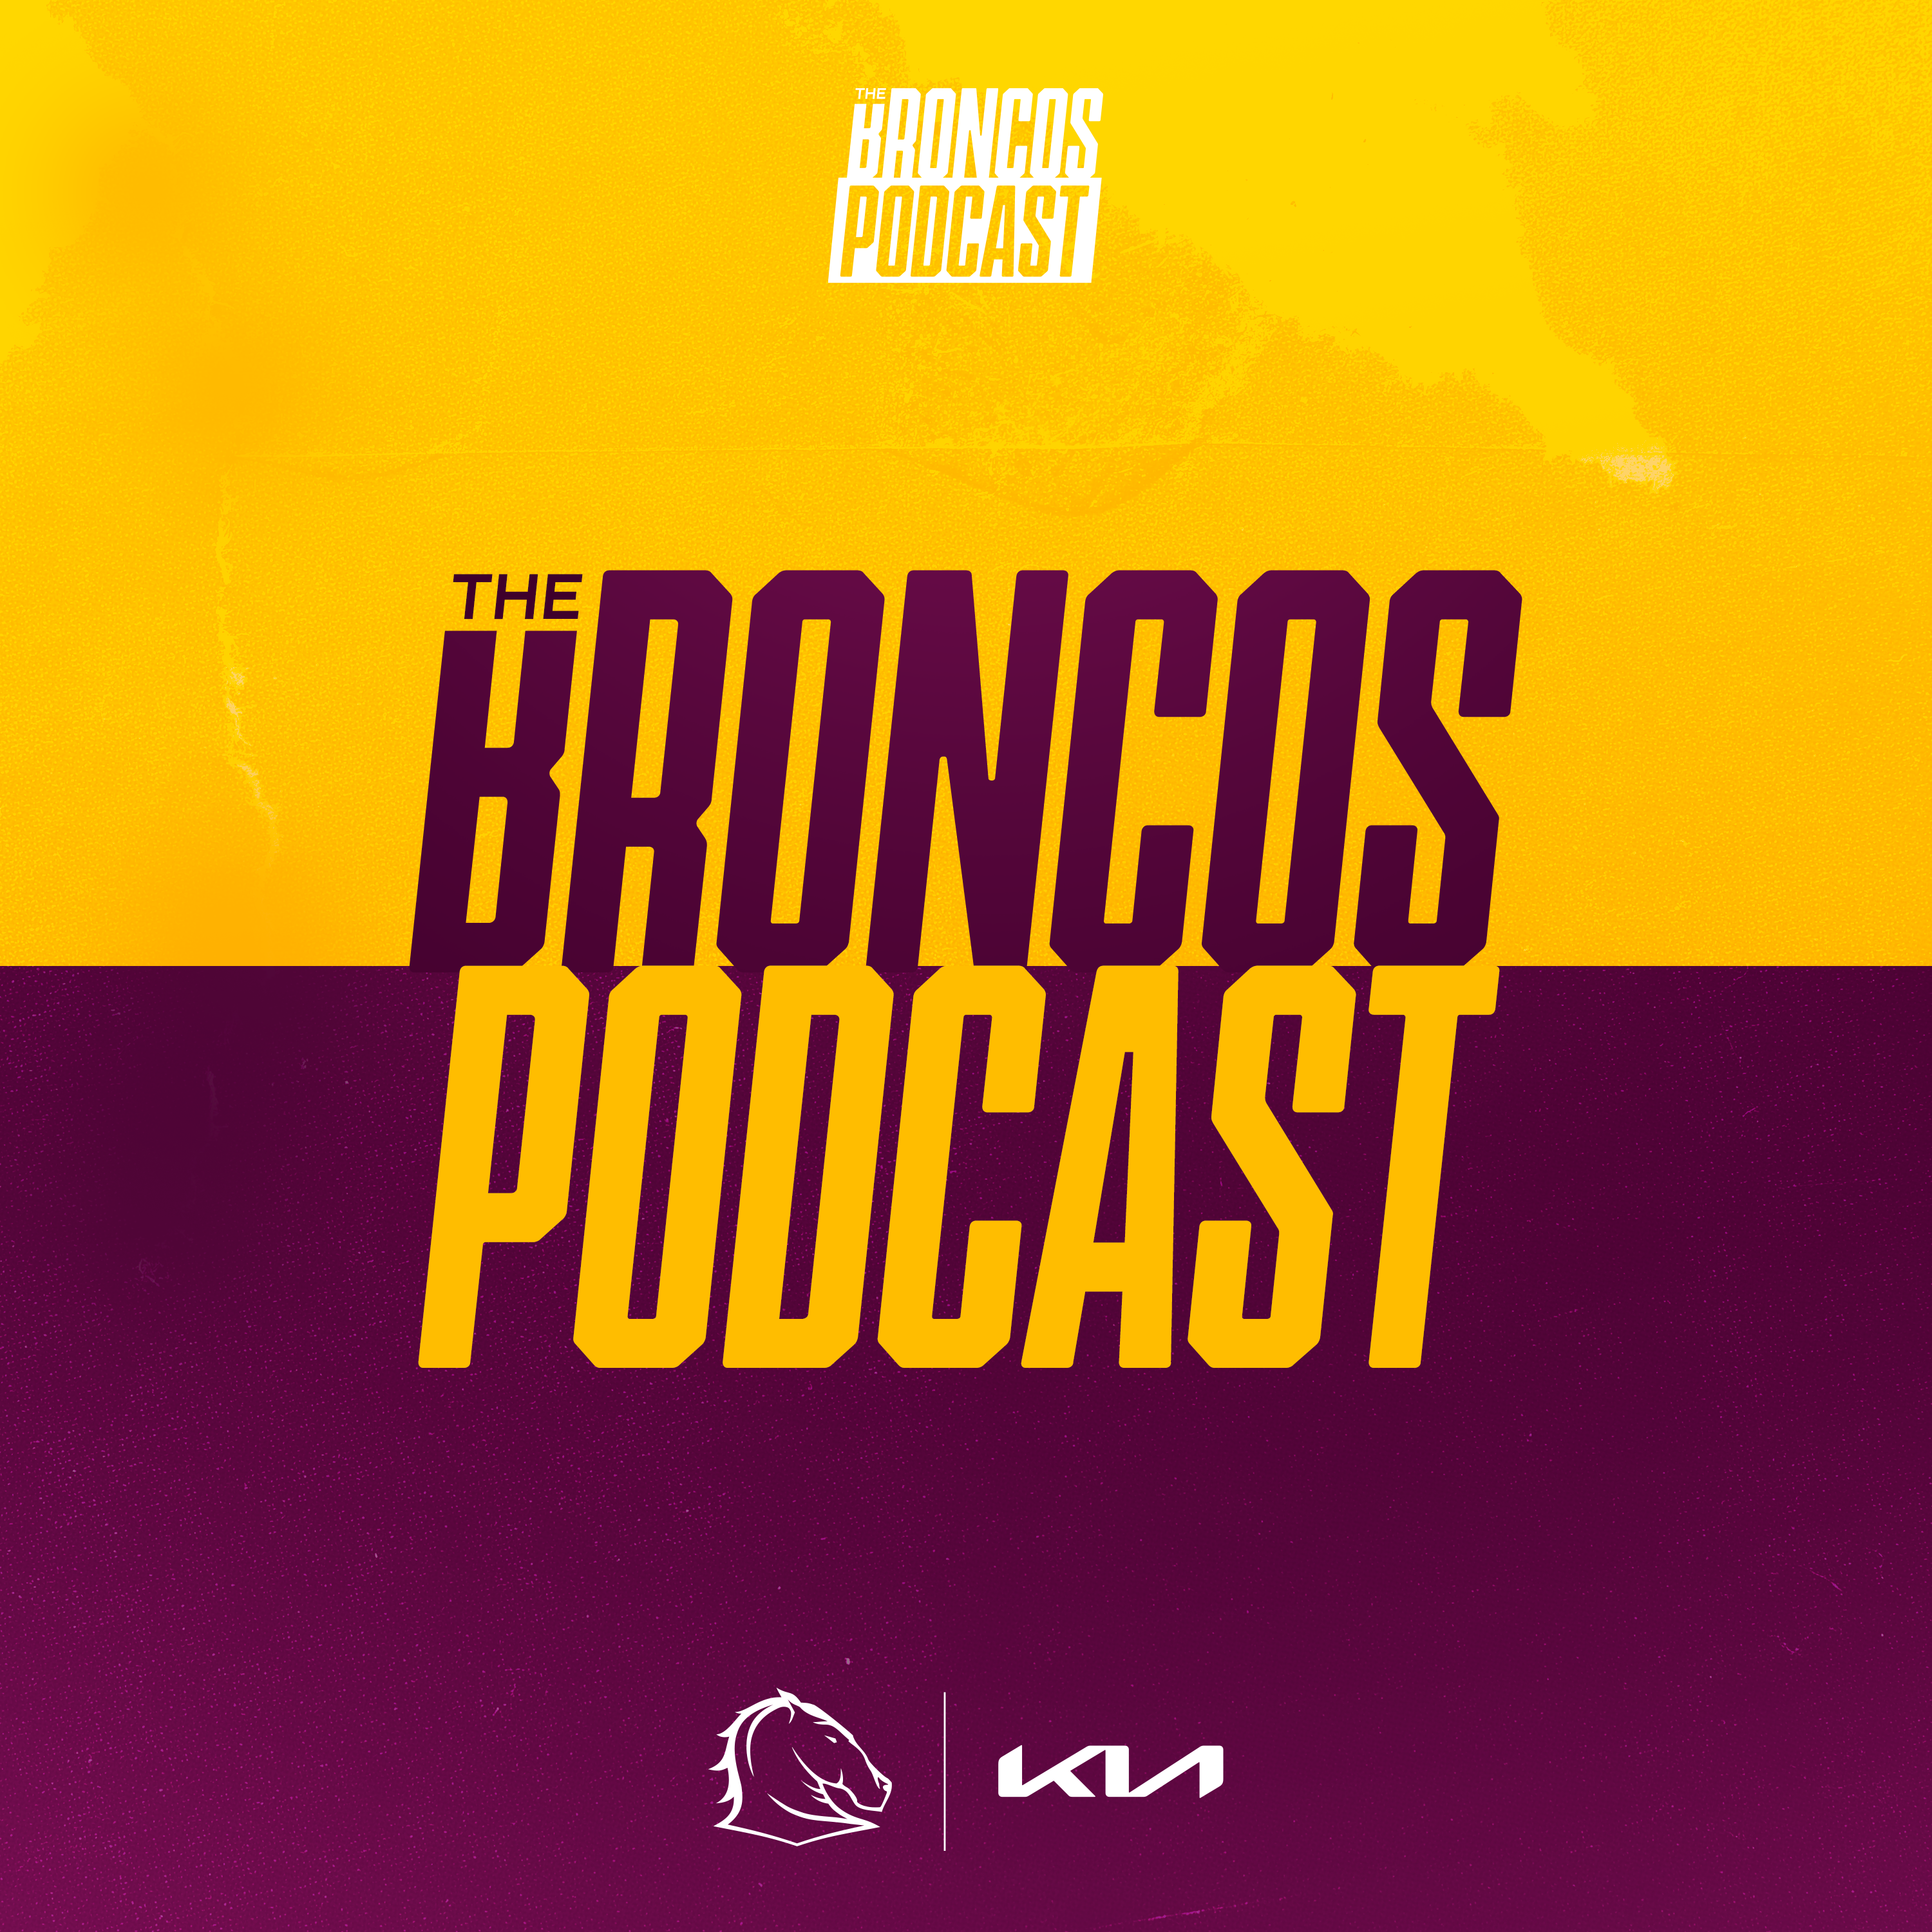 Broncos Podcast Back This Thursday